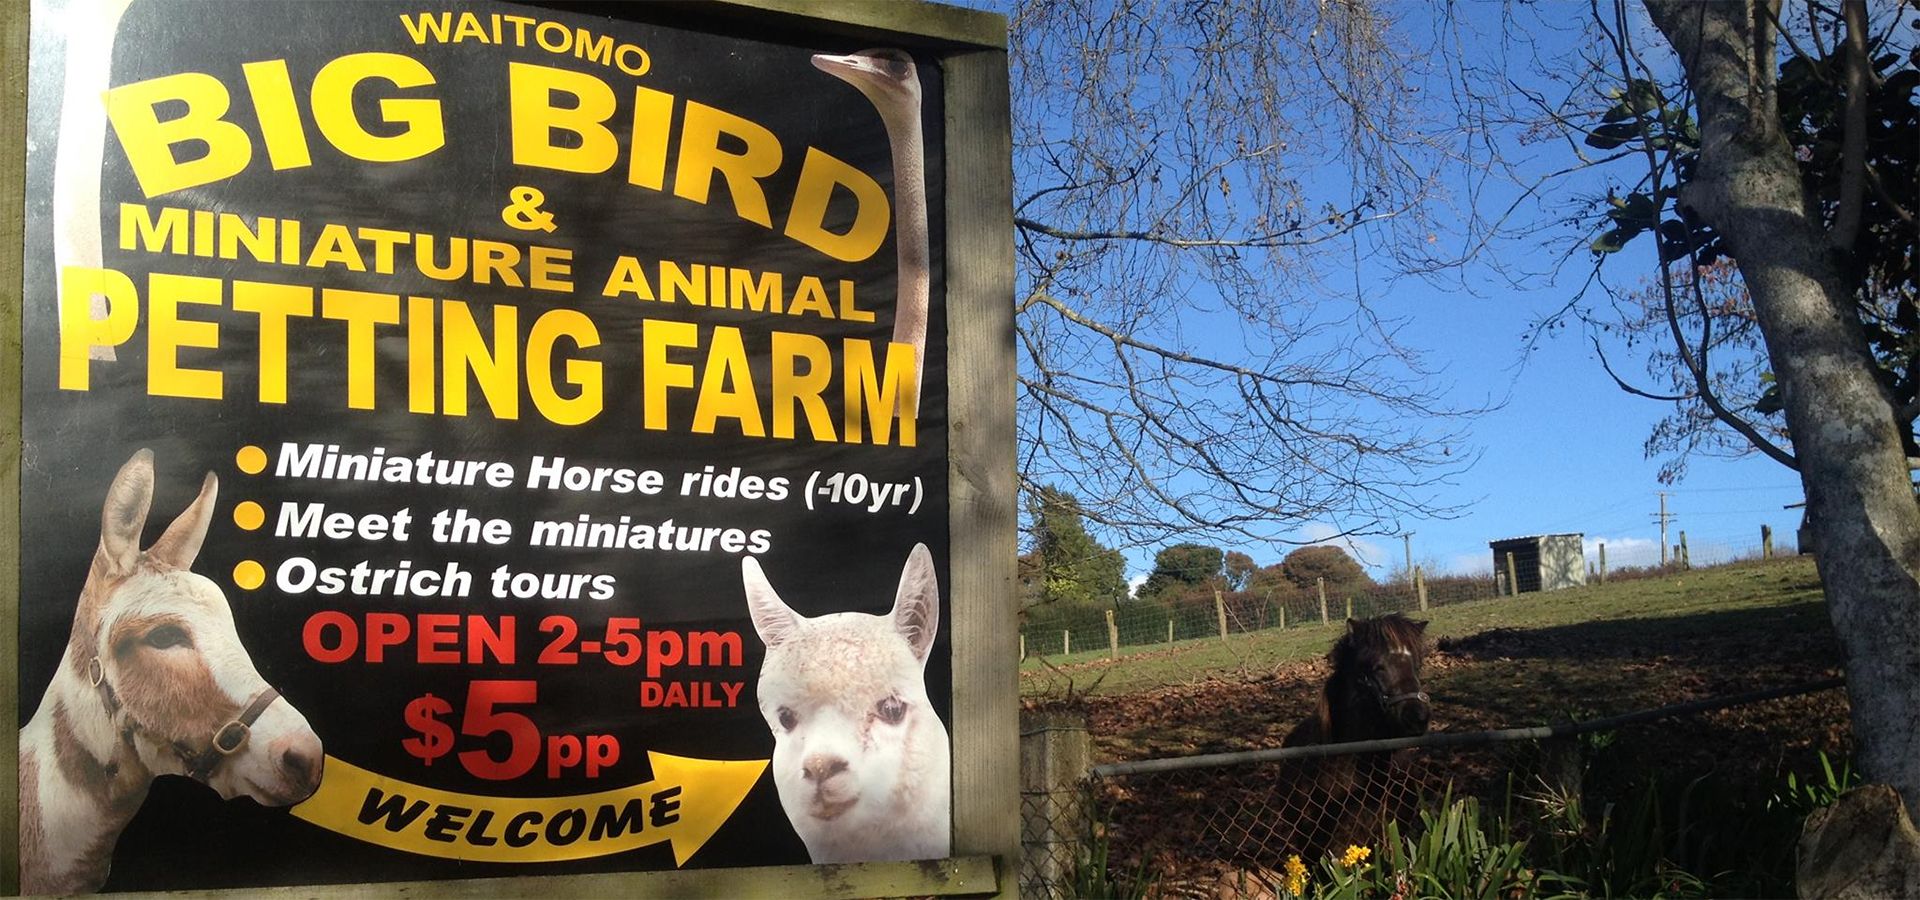 Waitomo Big Bird Bed and Breakfast and Petting Farm